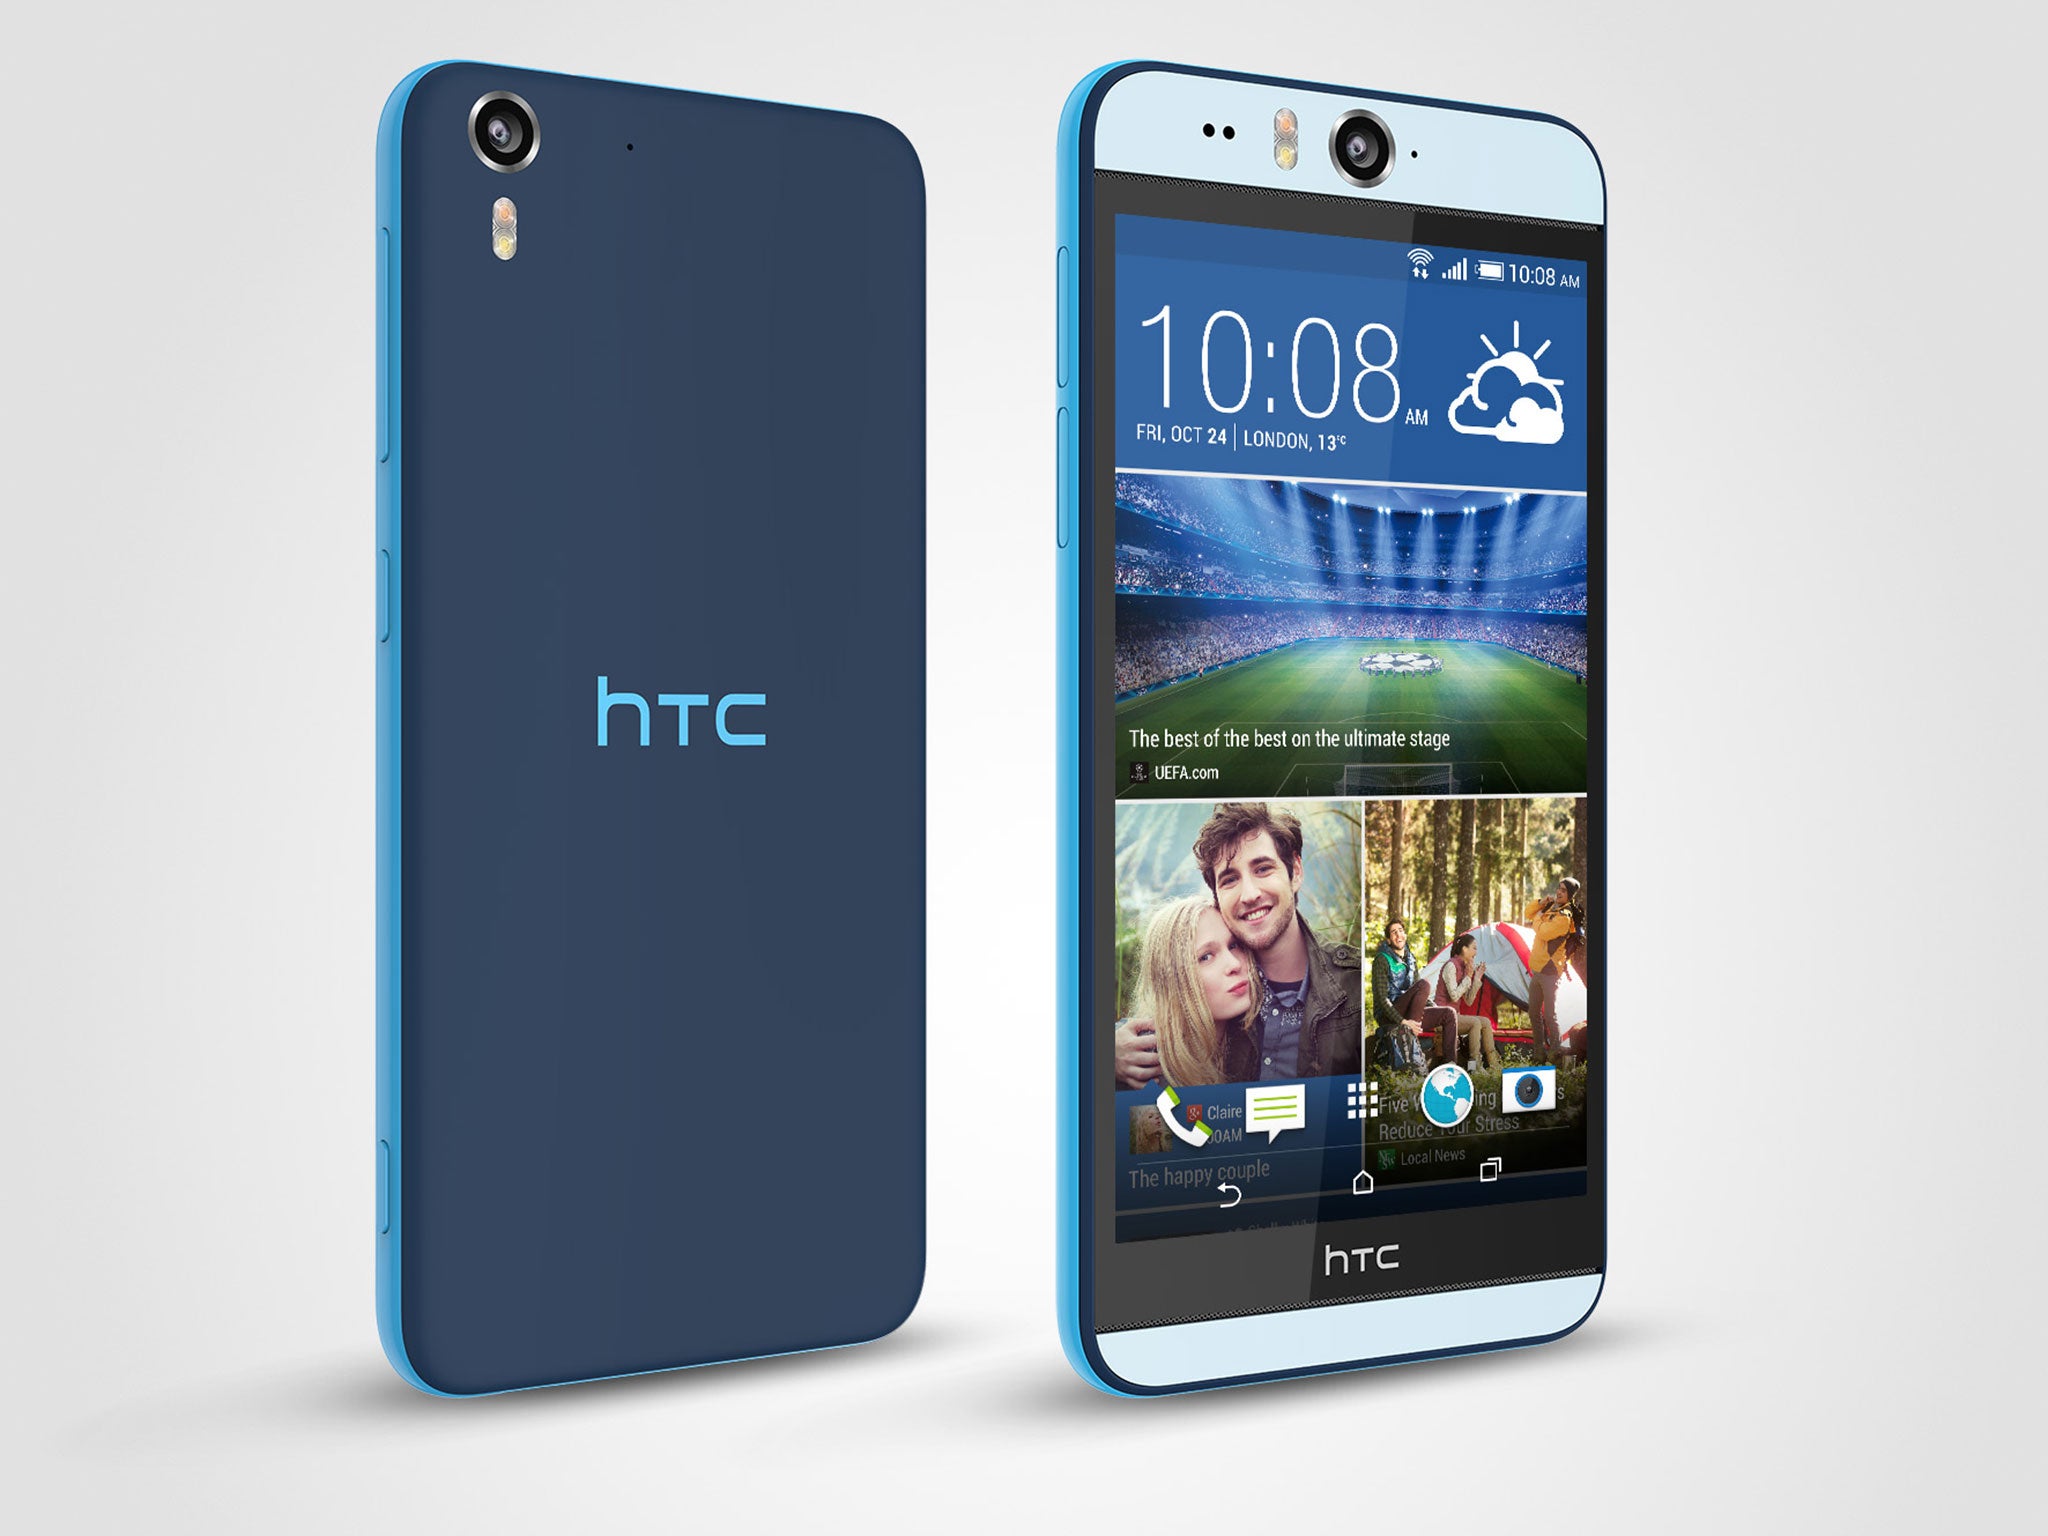 HTC Desire Eye: The slick, reasonably slimline phone has an industry-standard 13-megapixel rear camera